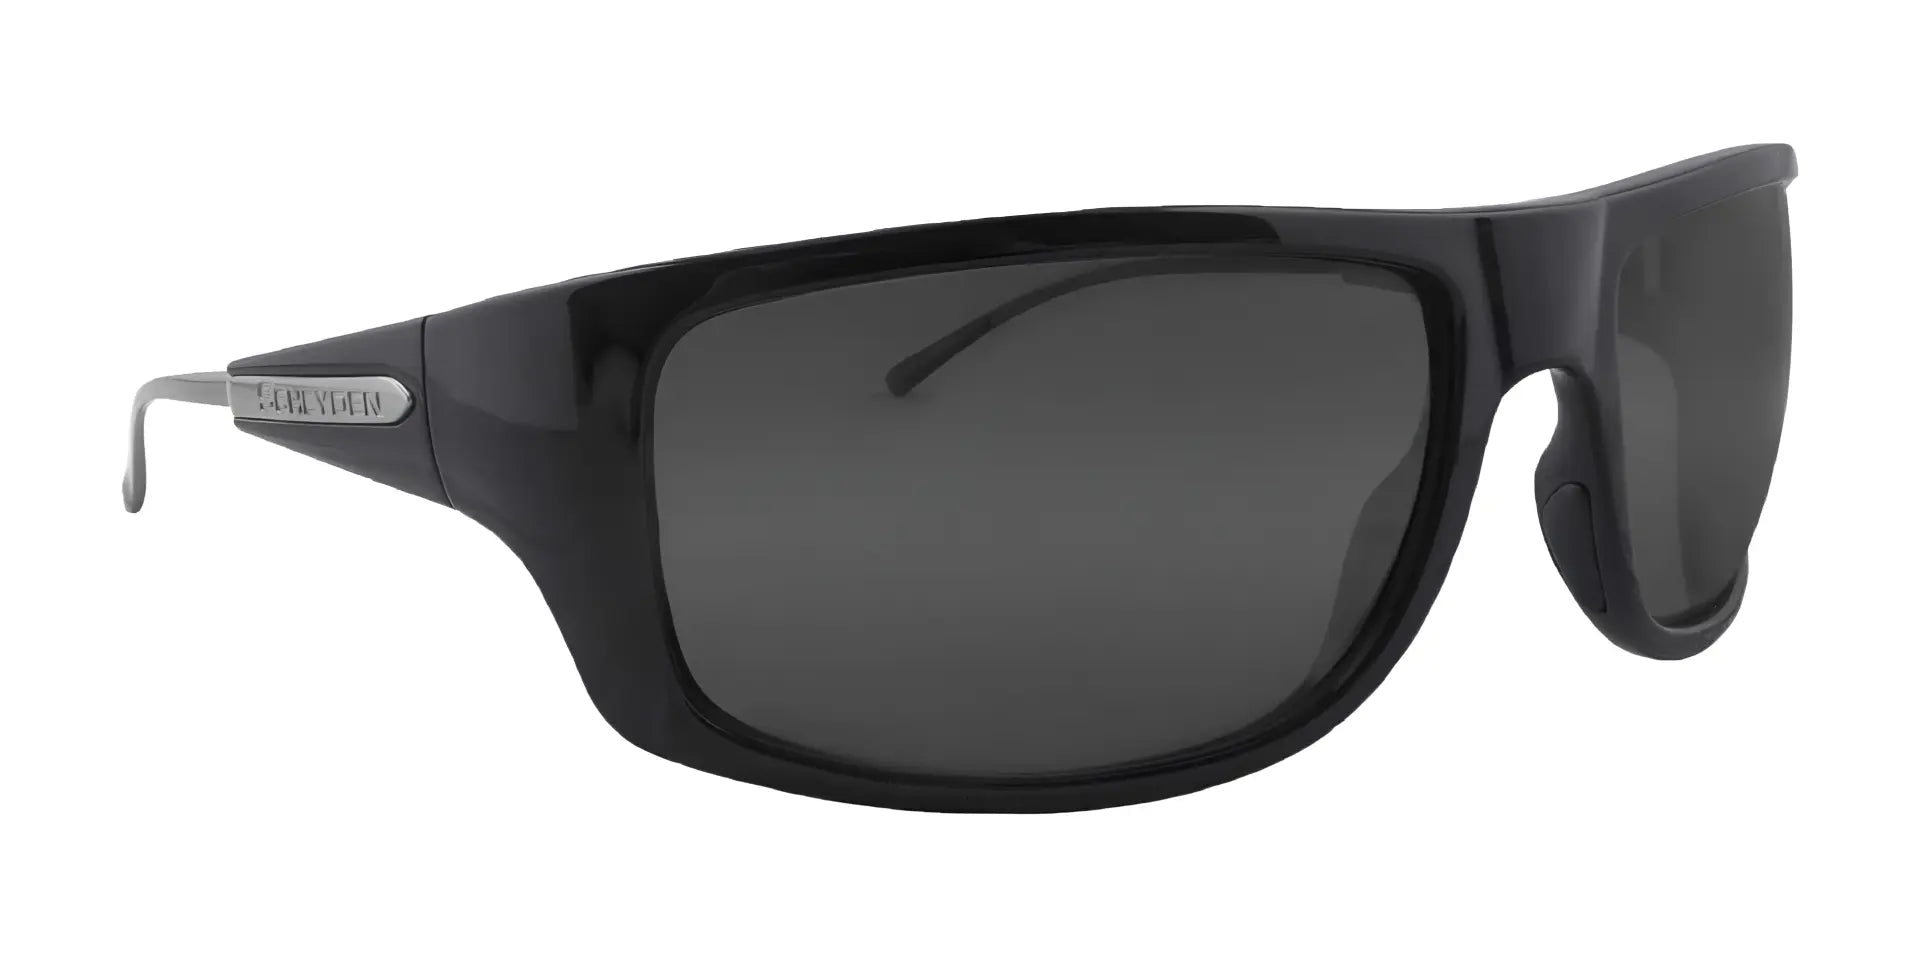 Scheyden Panorama Sunglasses 279 / Black